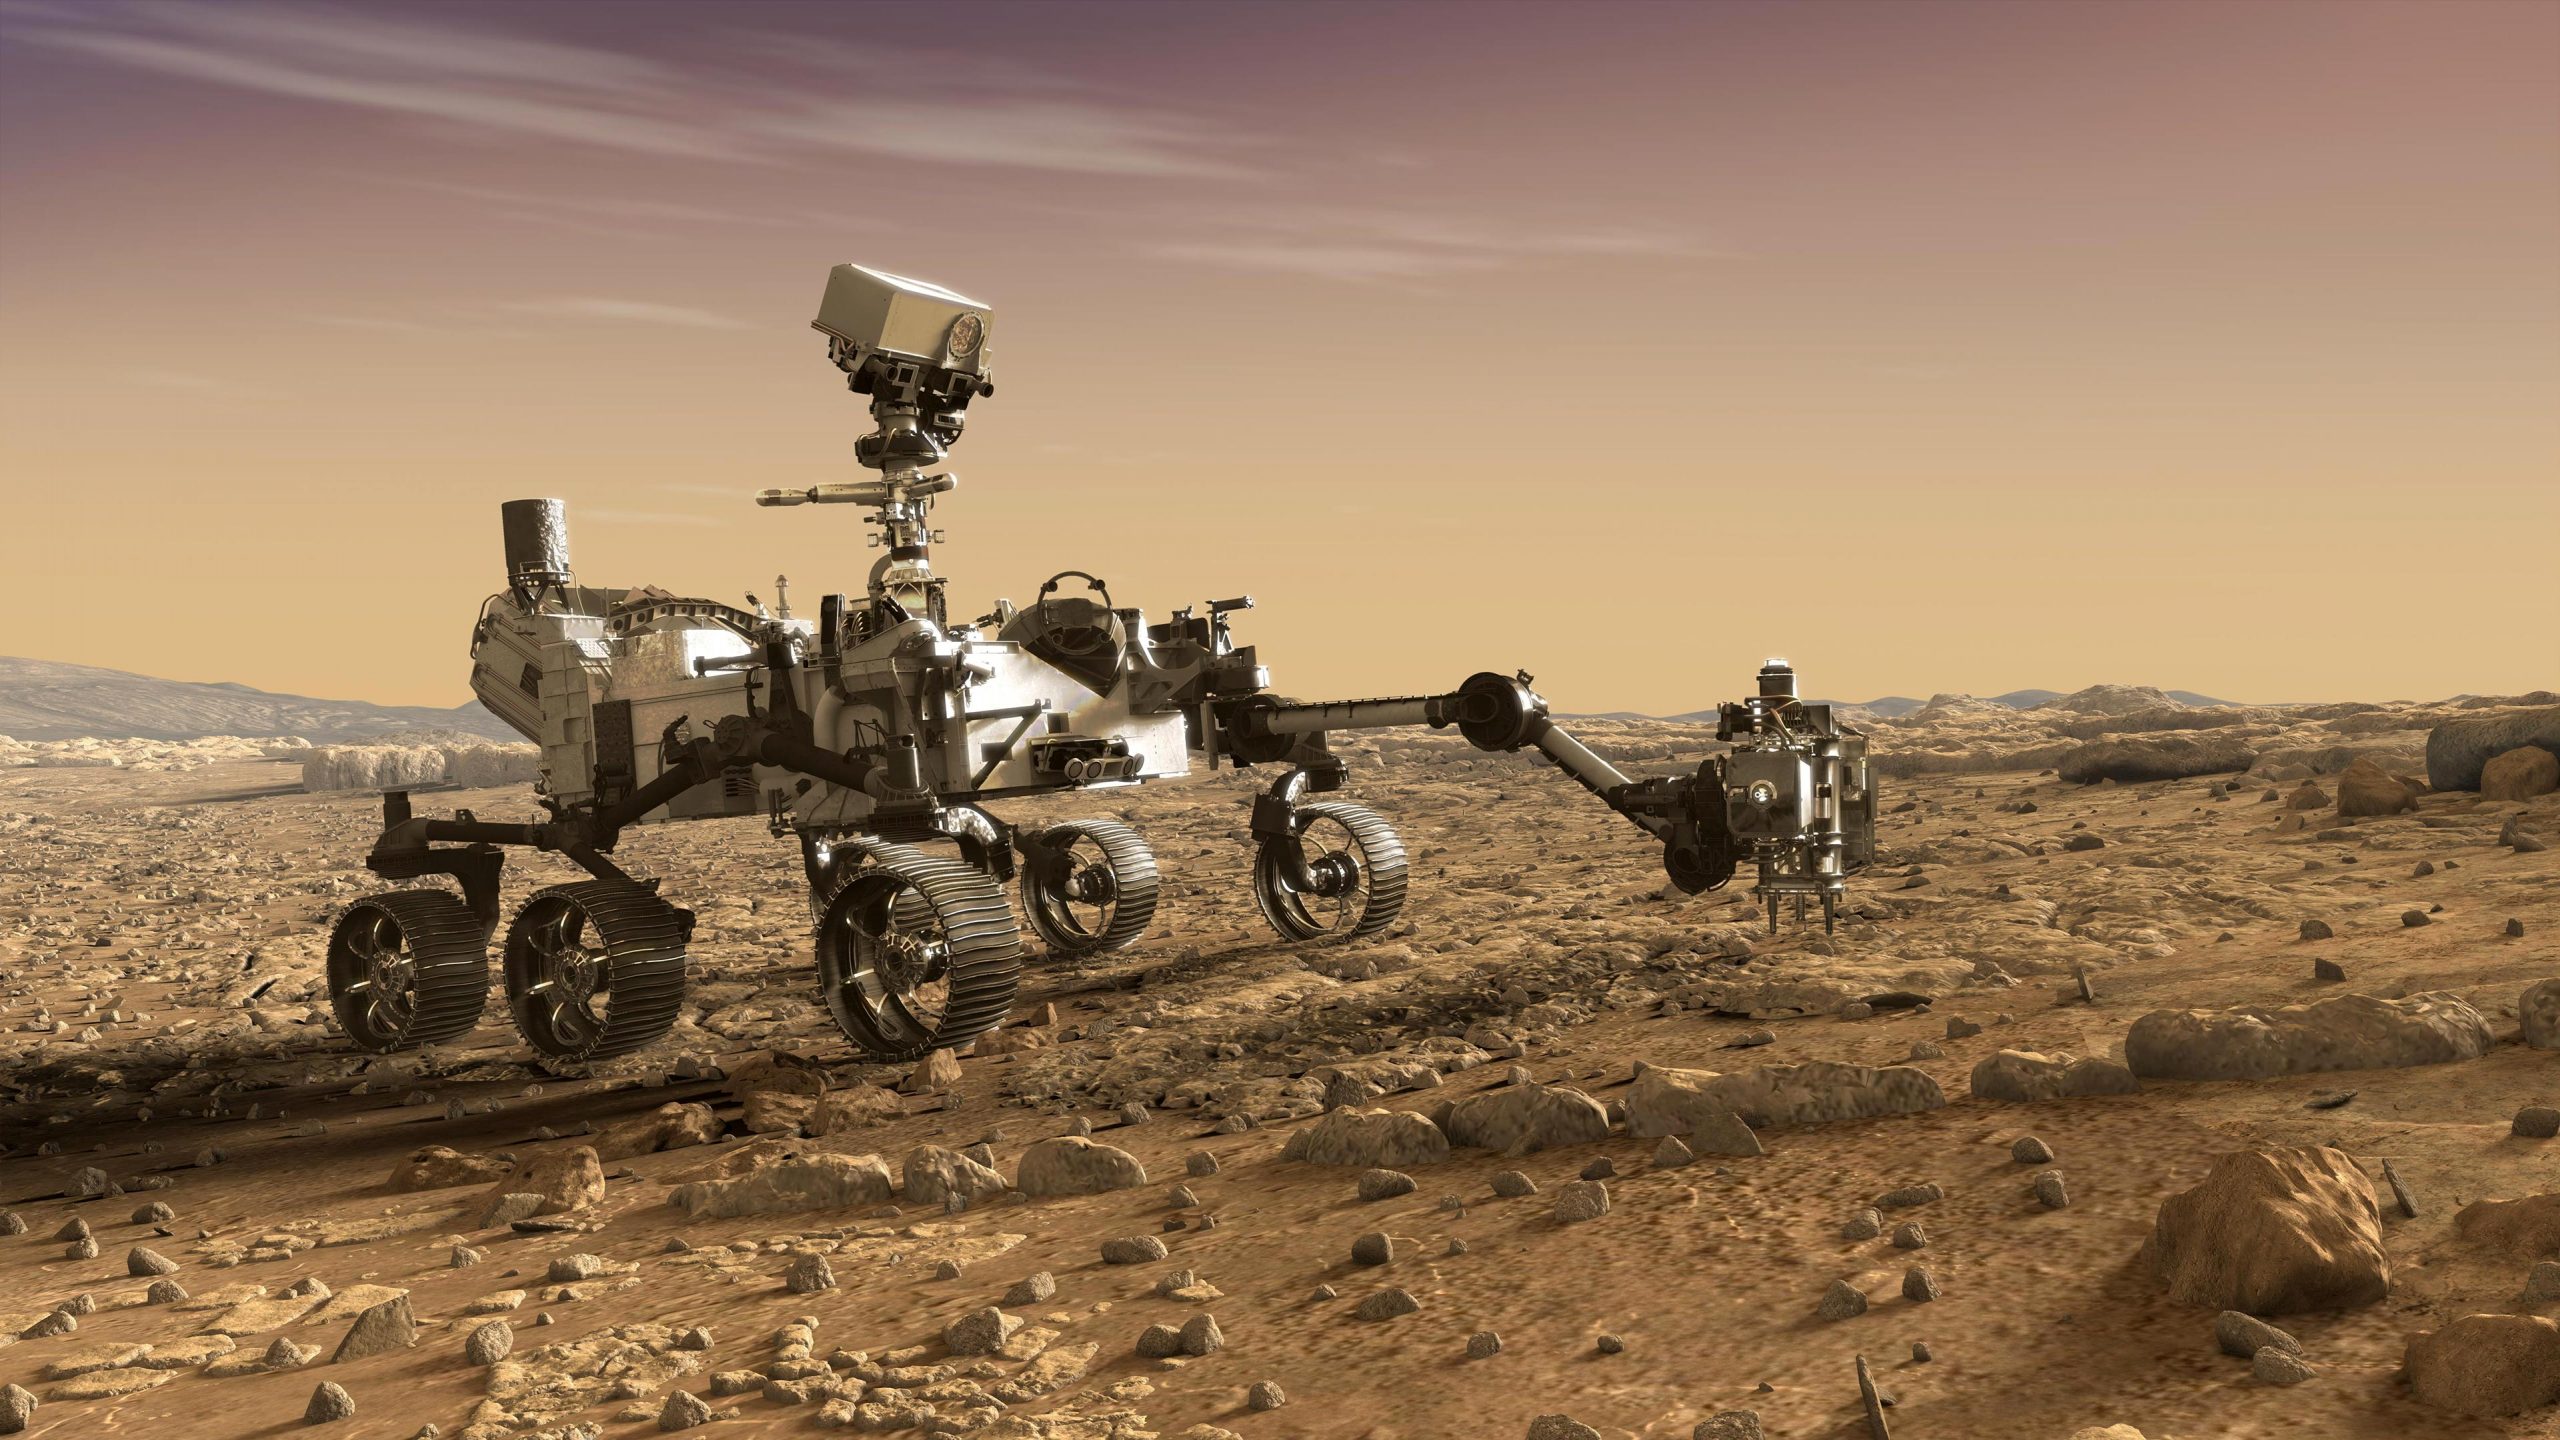 NASAs-Mars-2020-Perseverance-Rover-Robotic-Arm-scaled.jpg